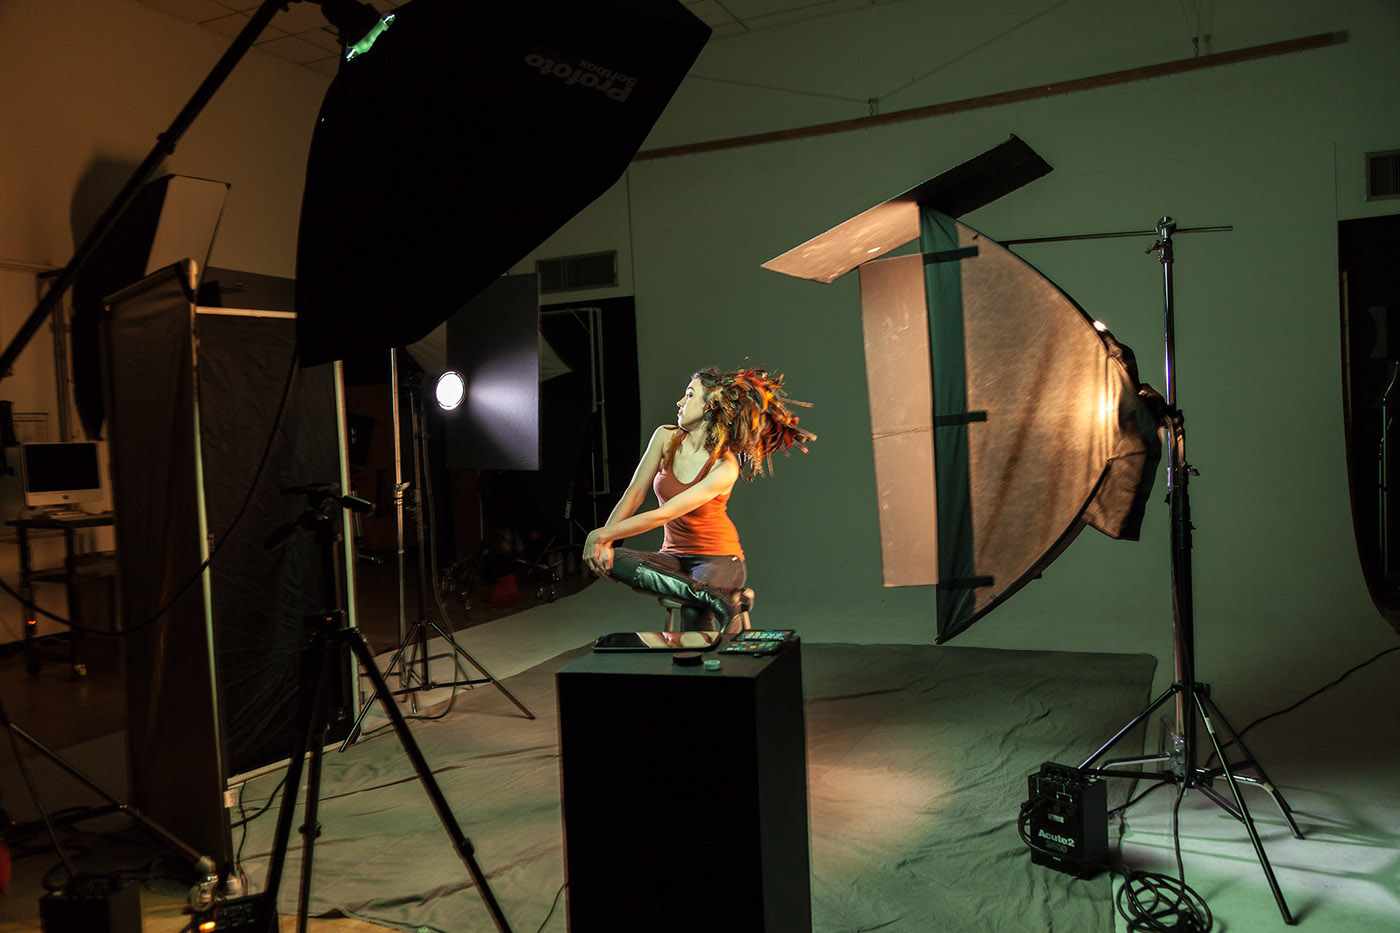 fire female headdress model studio lighting slow shutter digital effect photoshop lightroom CCAD columbus